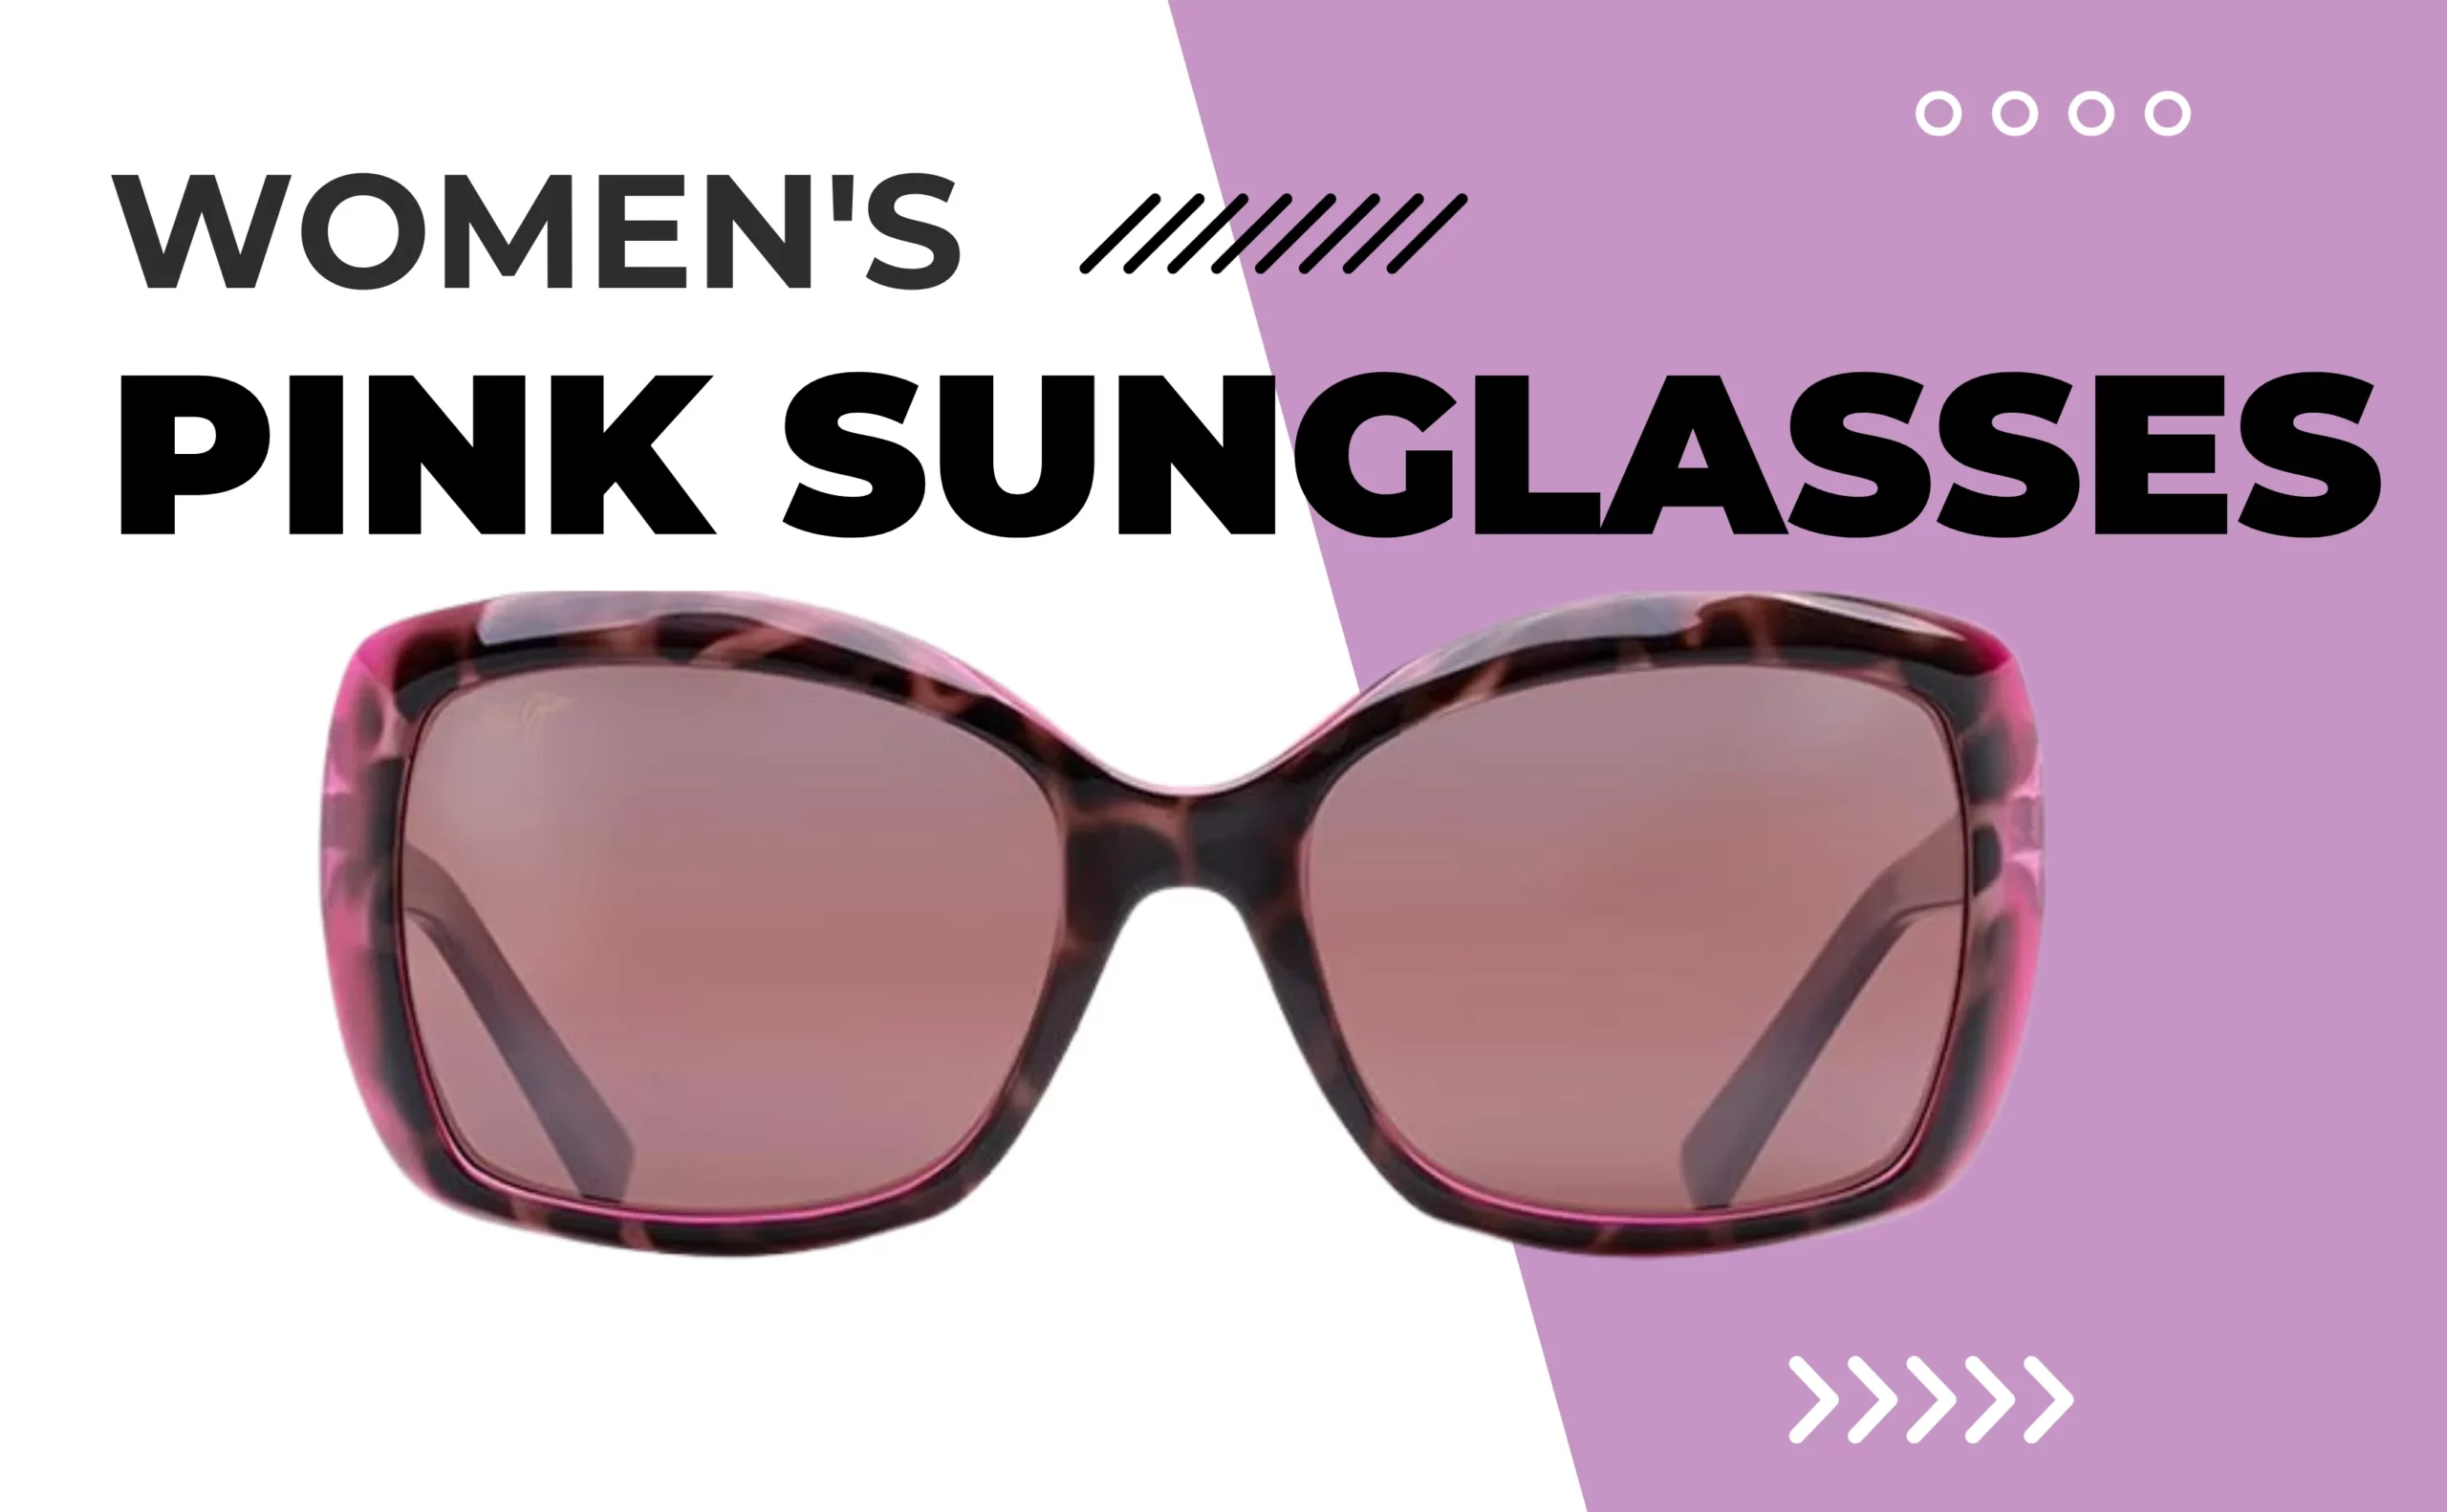 women's pink sunglasses